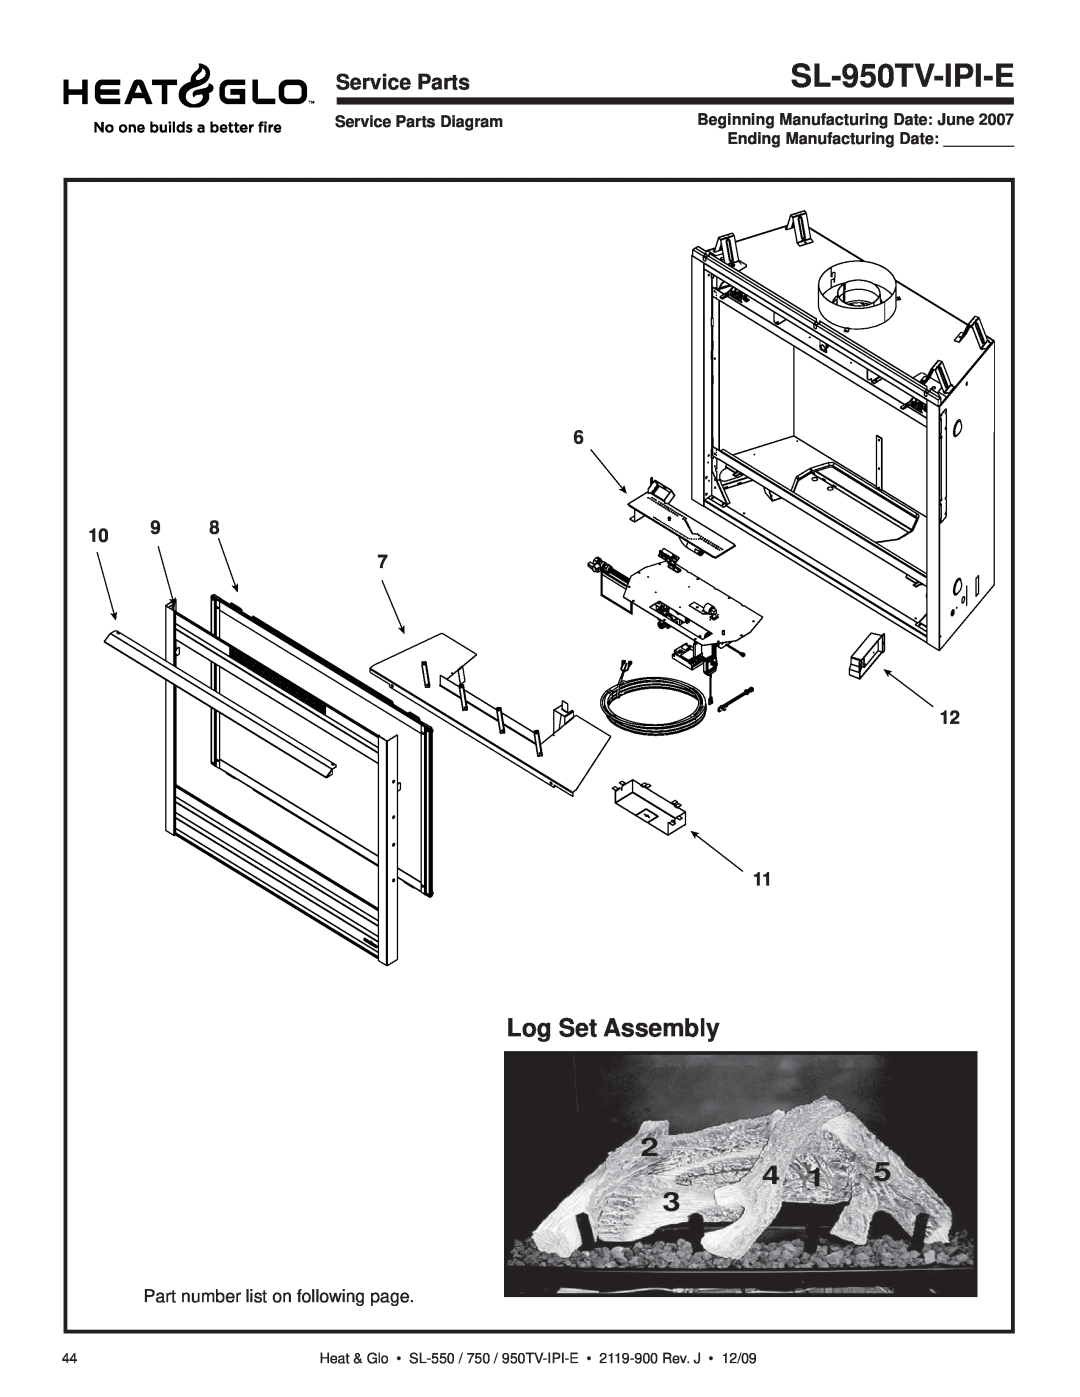 Heat & Glo LifeStyle SL-550TV-IPI-E, SL-750TV-IPI-E SL-950TV-IPI-E, 2 4, Log Set Assembly, Service Parts Diagram 